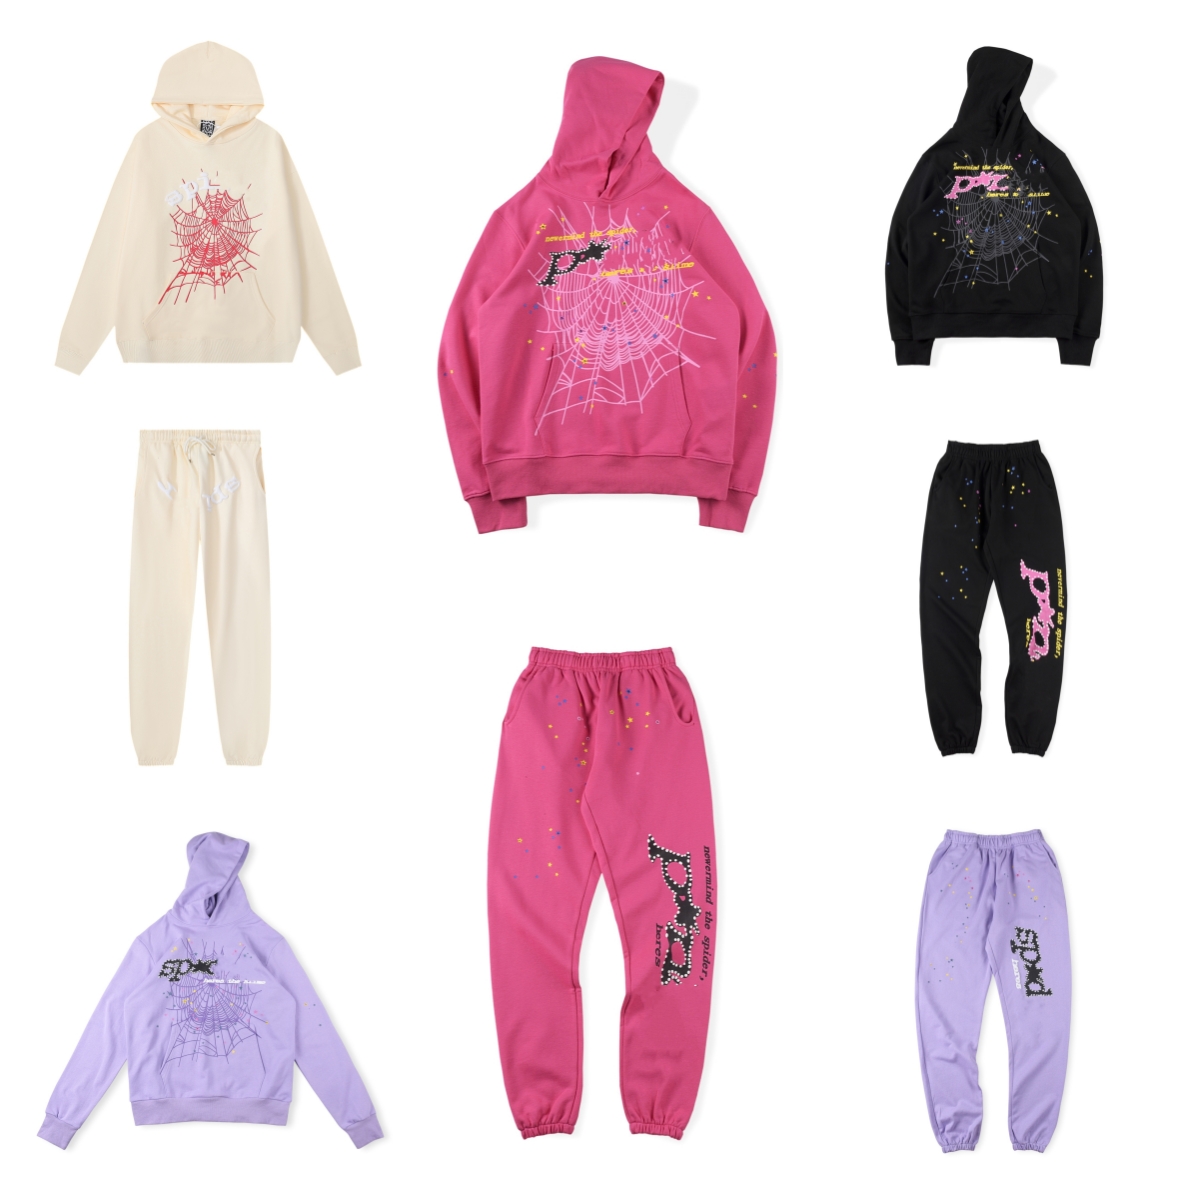 Designer men hoodie Pink Sweatshirt mens Cotton Fashion Hoodies Hoody Unisex sportswear Hip Hop Tracksuit Pullover high quality Y2K S-XL